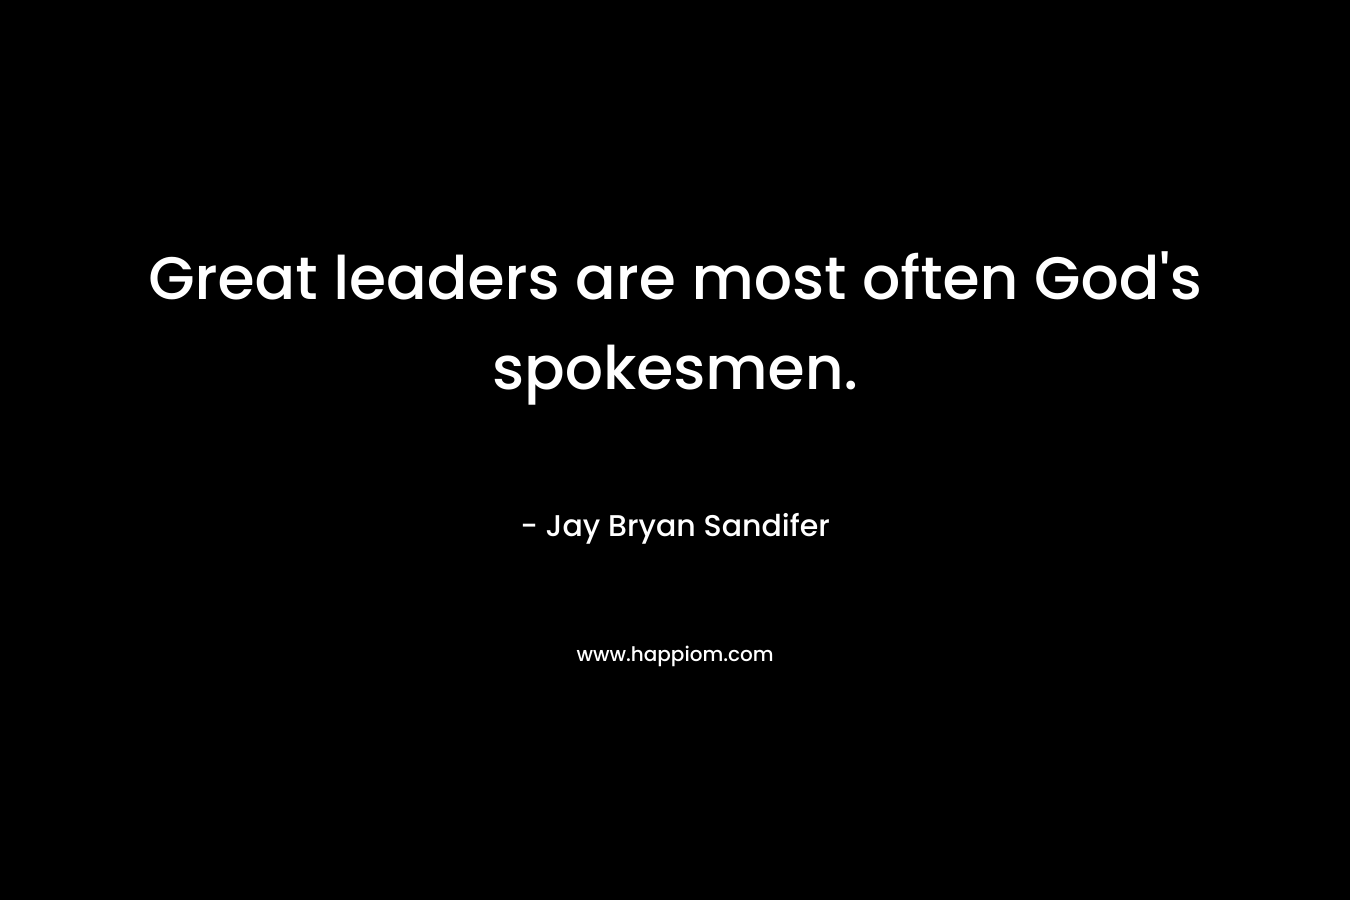 Great leaders are most often God's spokesmen.